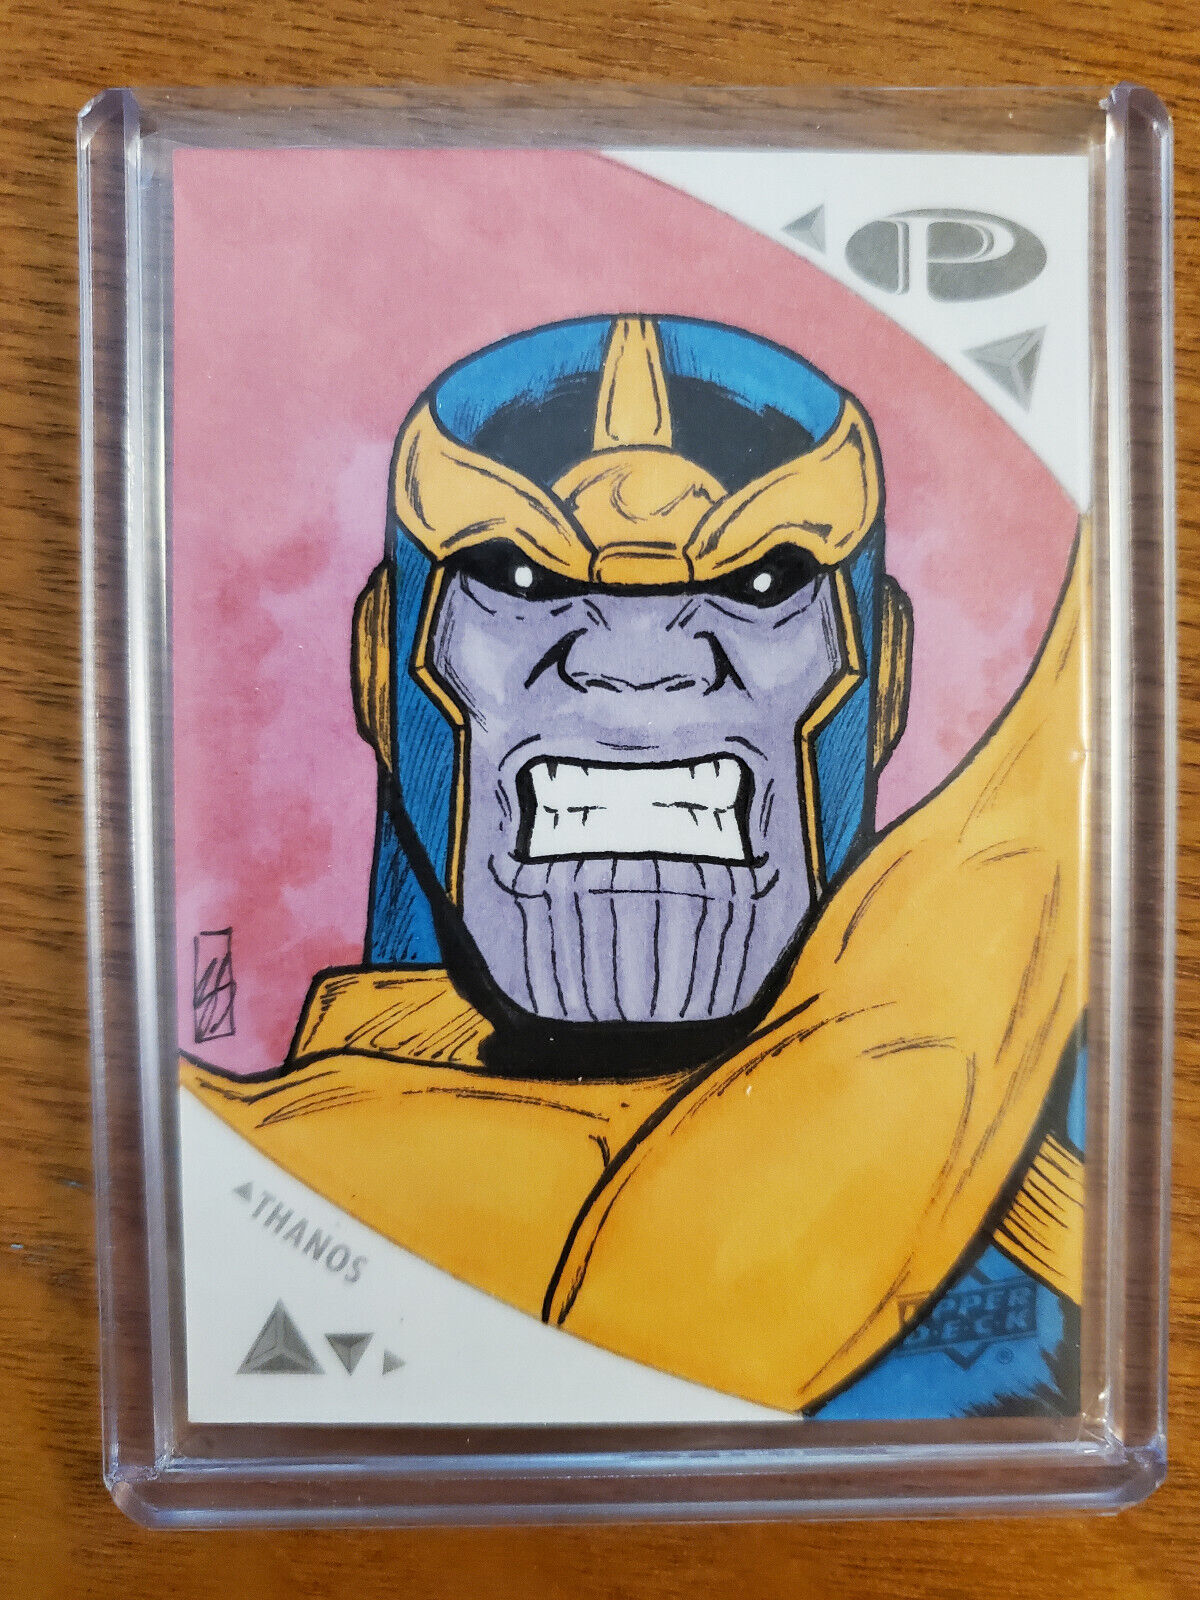 2019 Upper Deck UD Marvel Premier Sketch Card Thanos by Sean Stannard